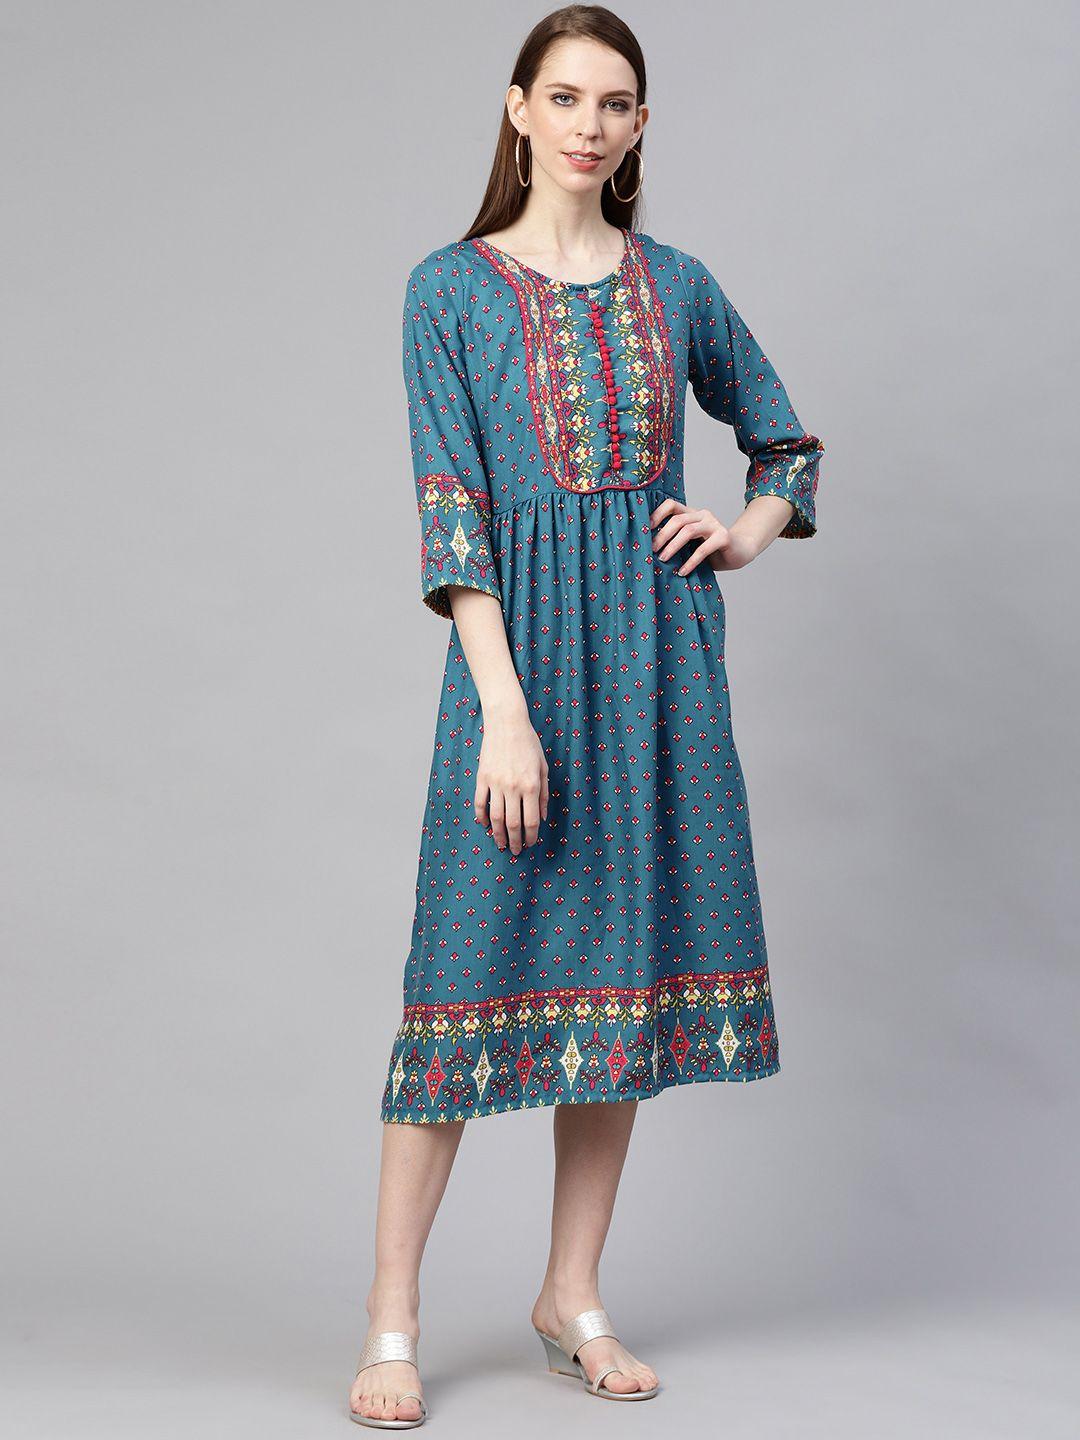 pluss blue & pink ethnic motifs ethnic a-line midi dress